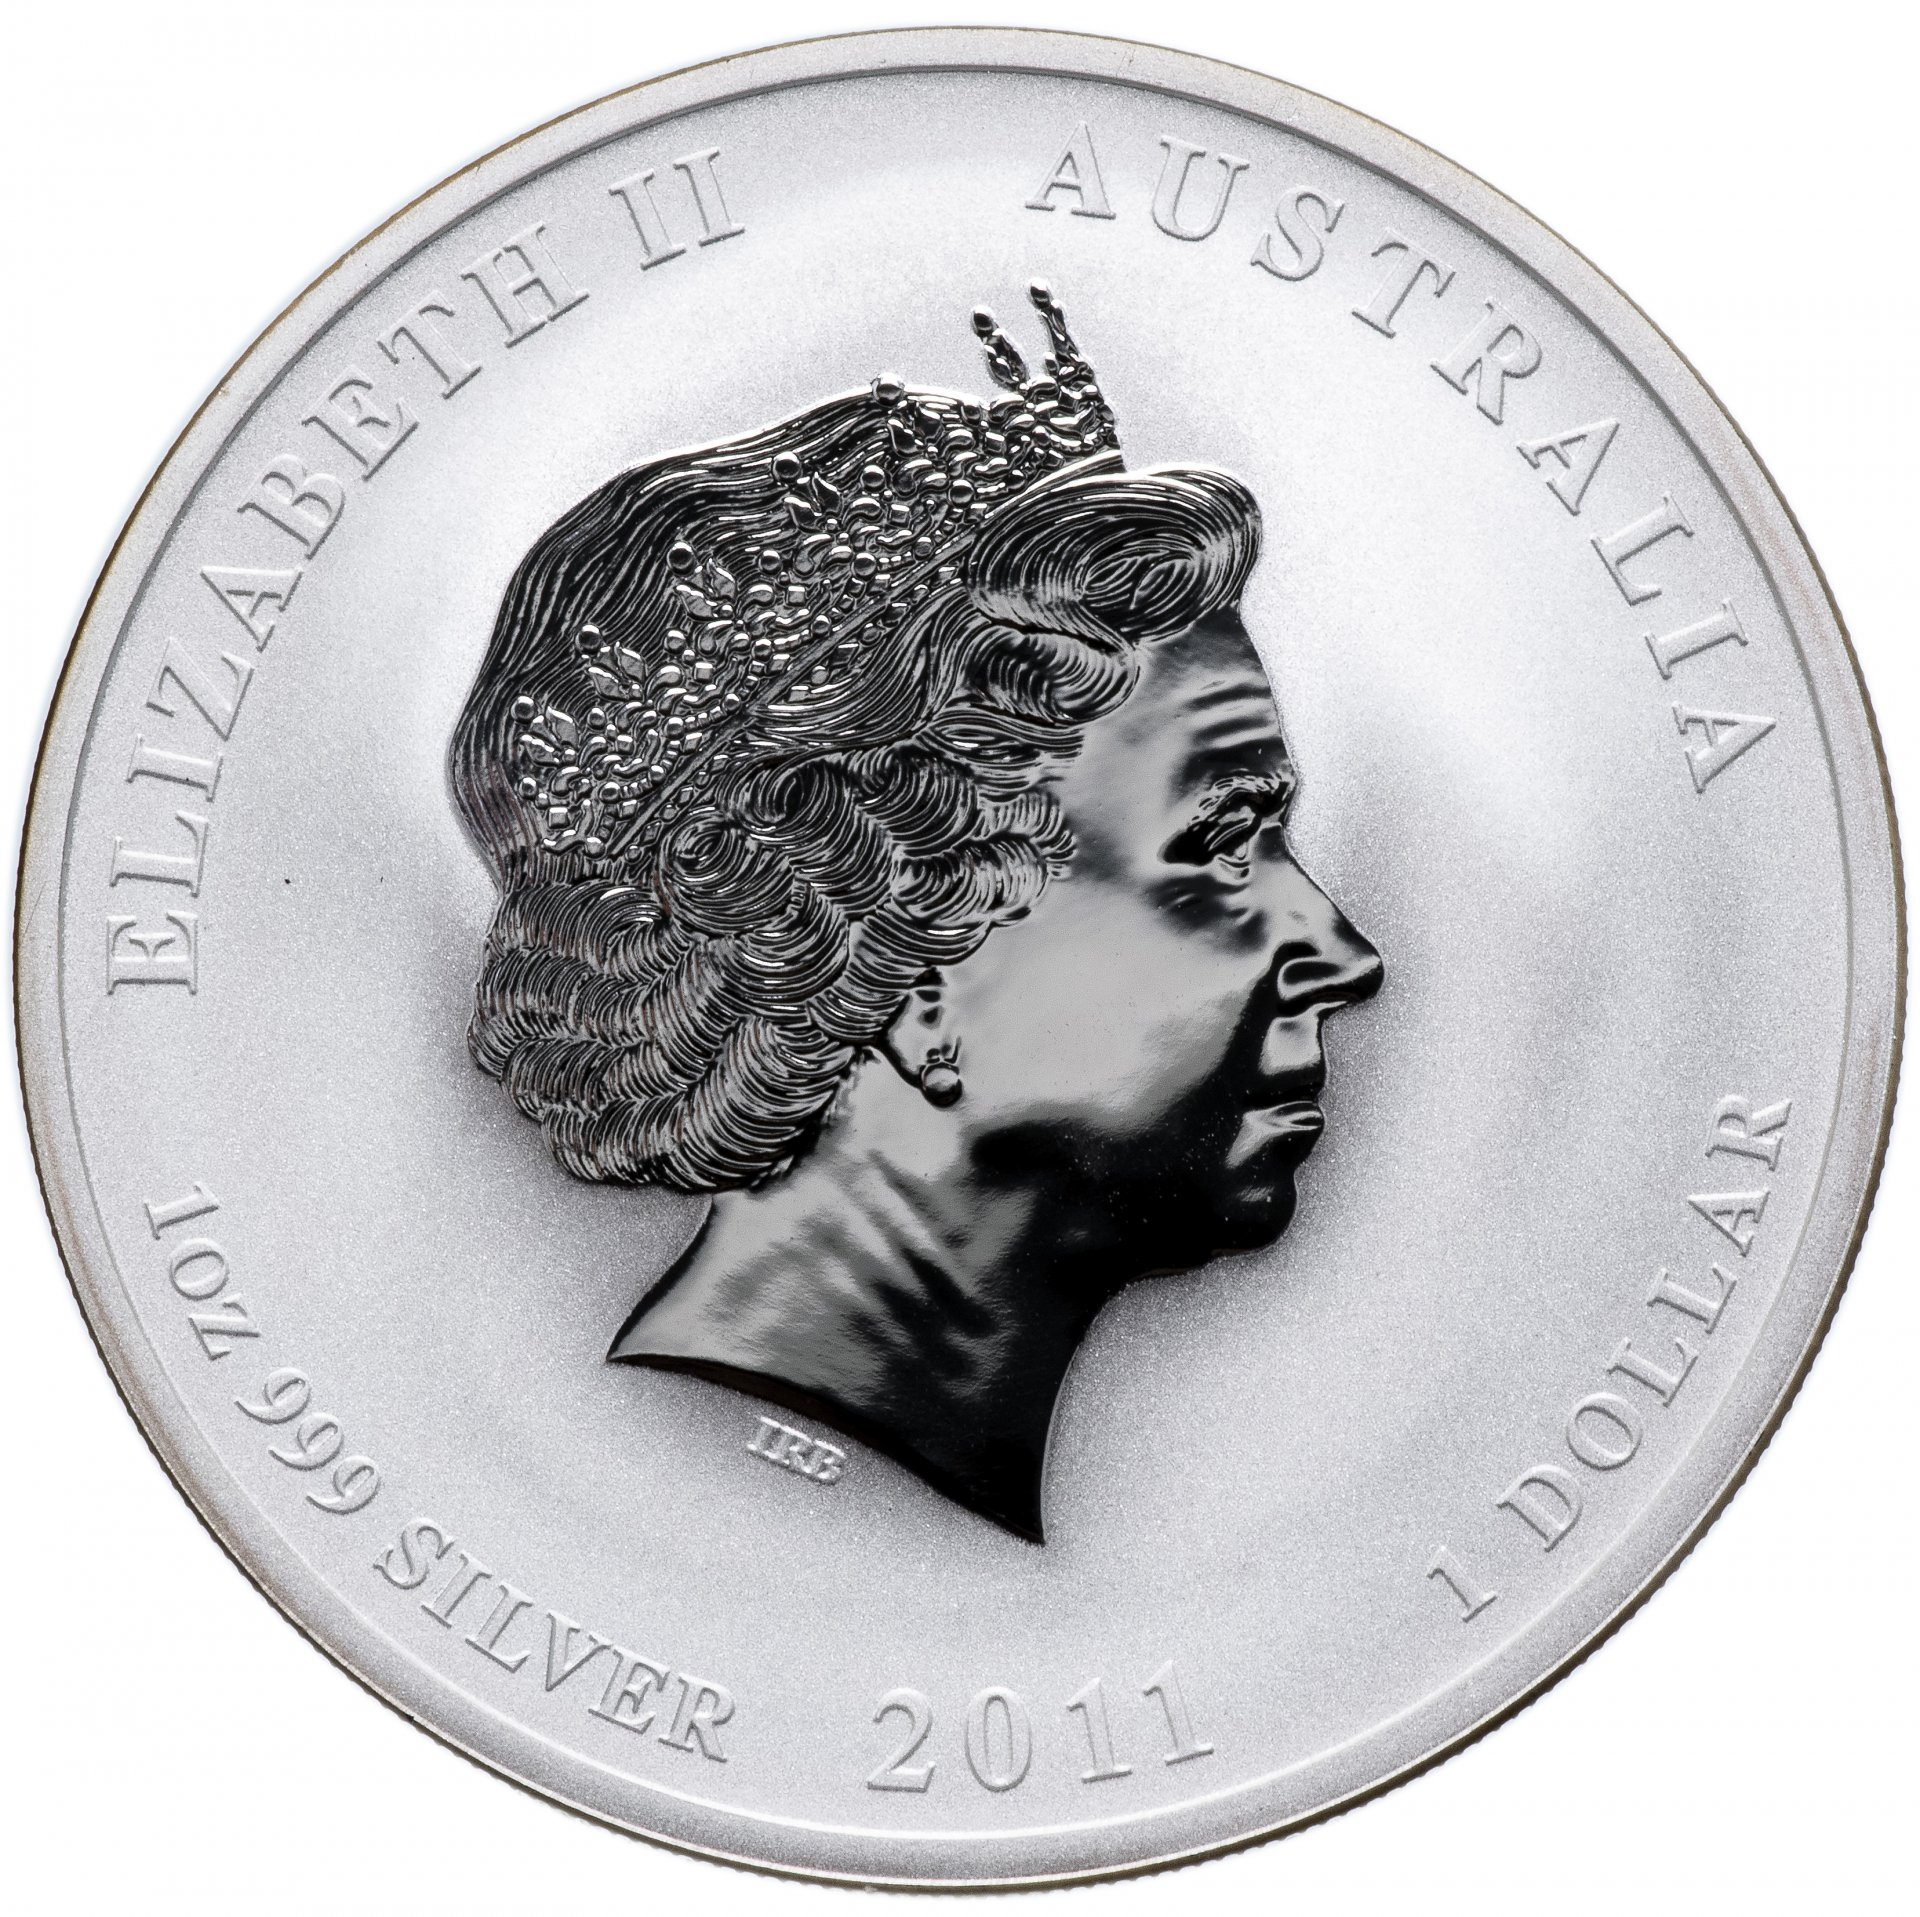 1 доллар австралия серебро. 1 Доллар 2011 серебро. 1 Доллар Австралии серебро 2011 год. Австралия 1 доллар, 2011 год кролика. Австралия 1 доллар 2011.